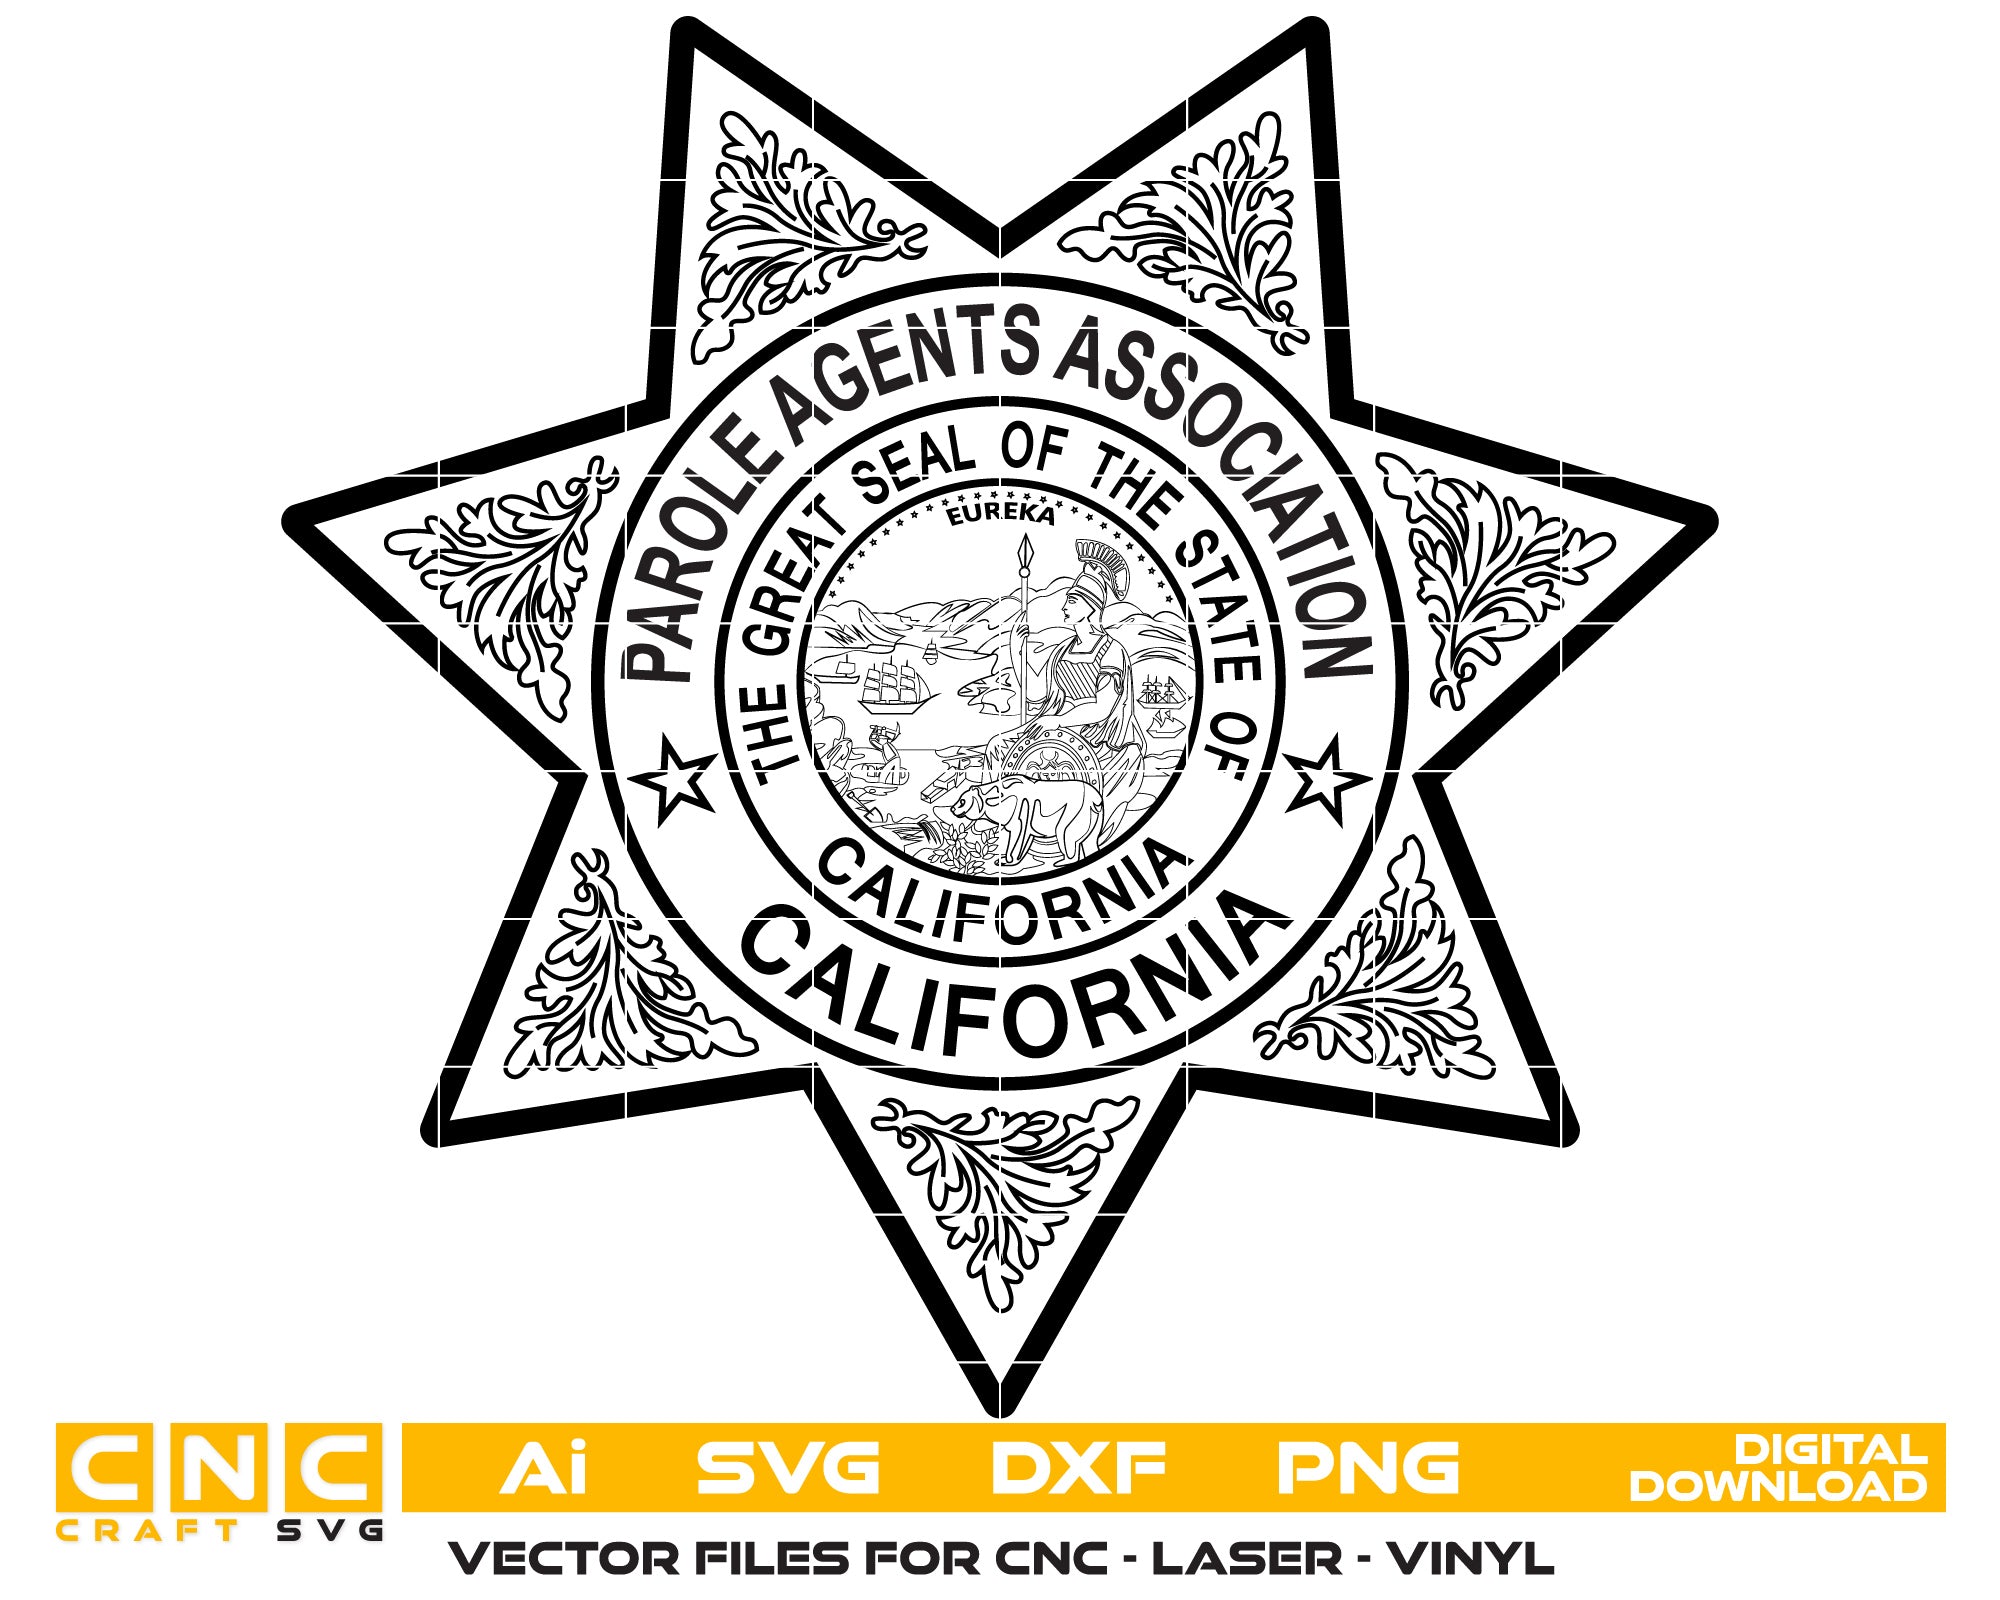 Parole Agents Association Badge vector art